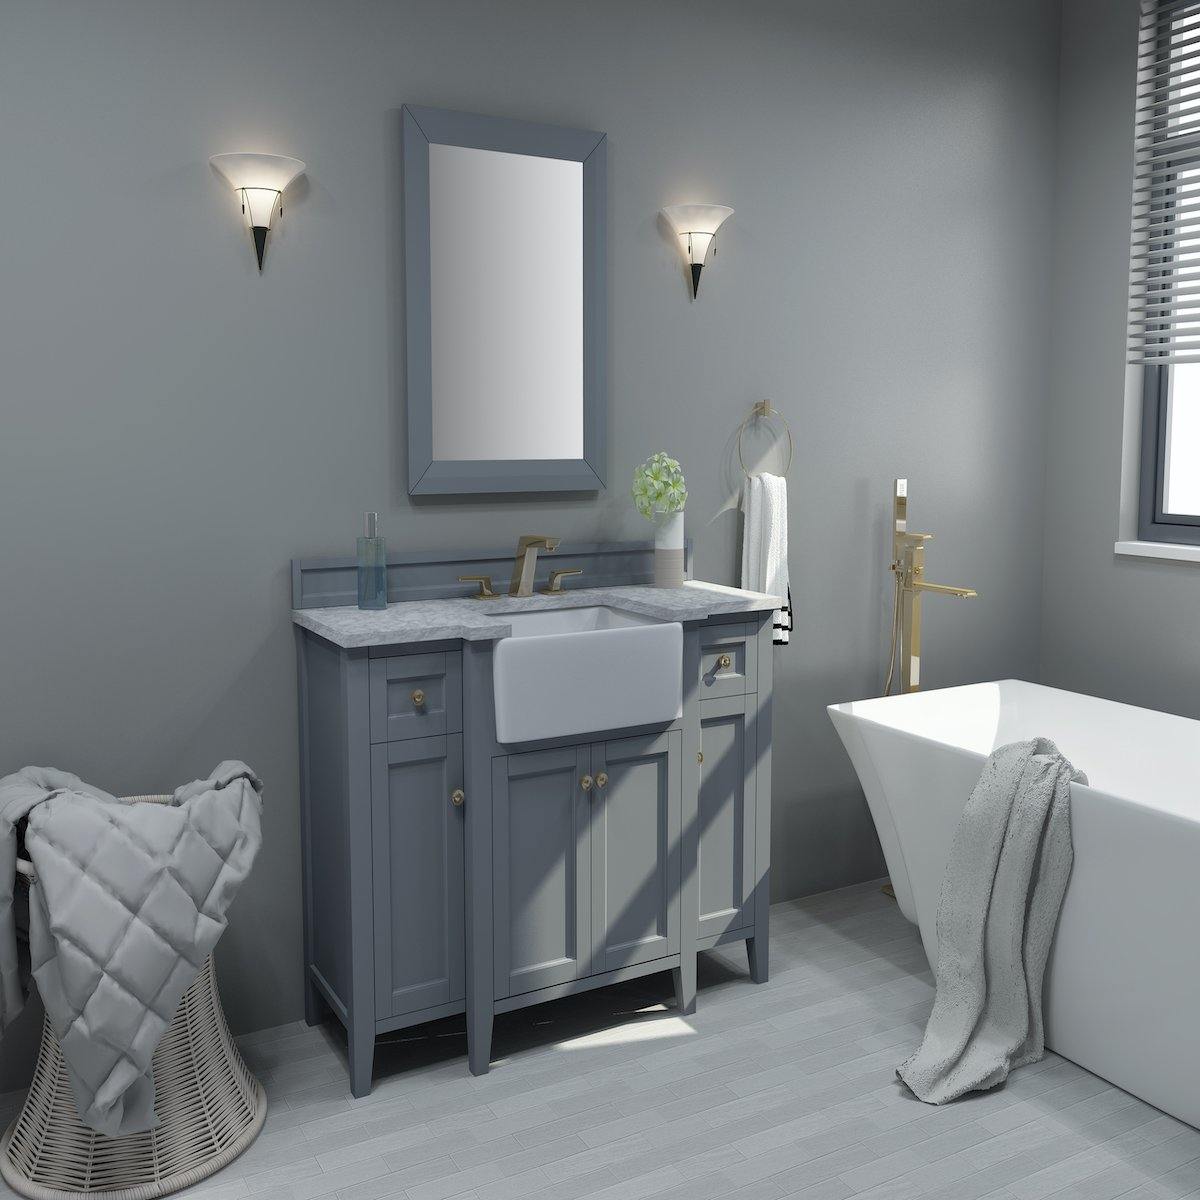 Ancerre Designs Adeline 48 Inch Sapphire Gray Single Vanity in Bathroom